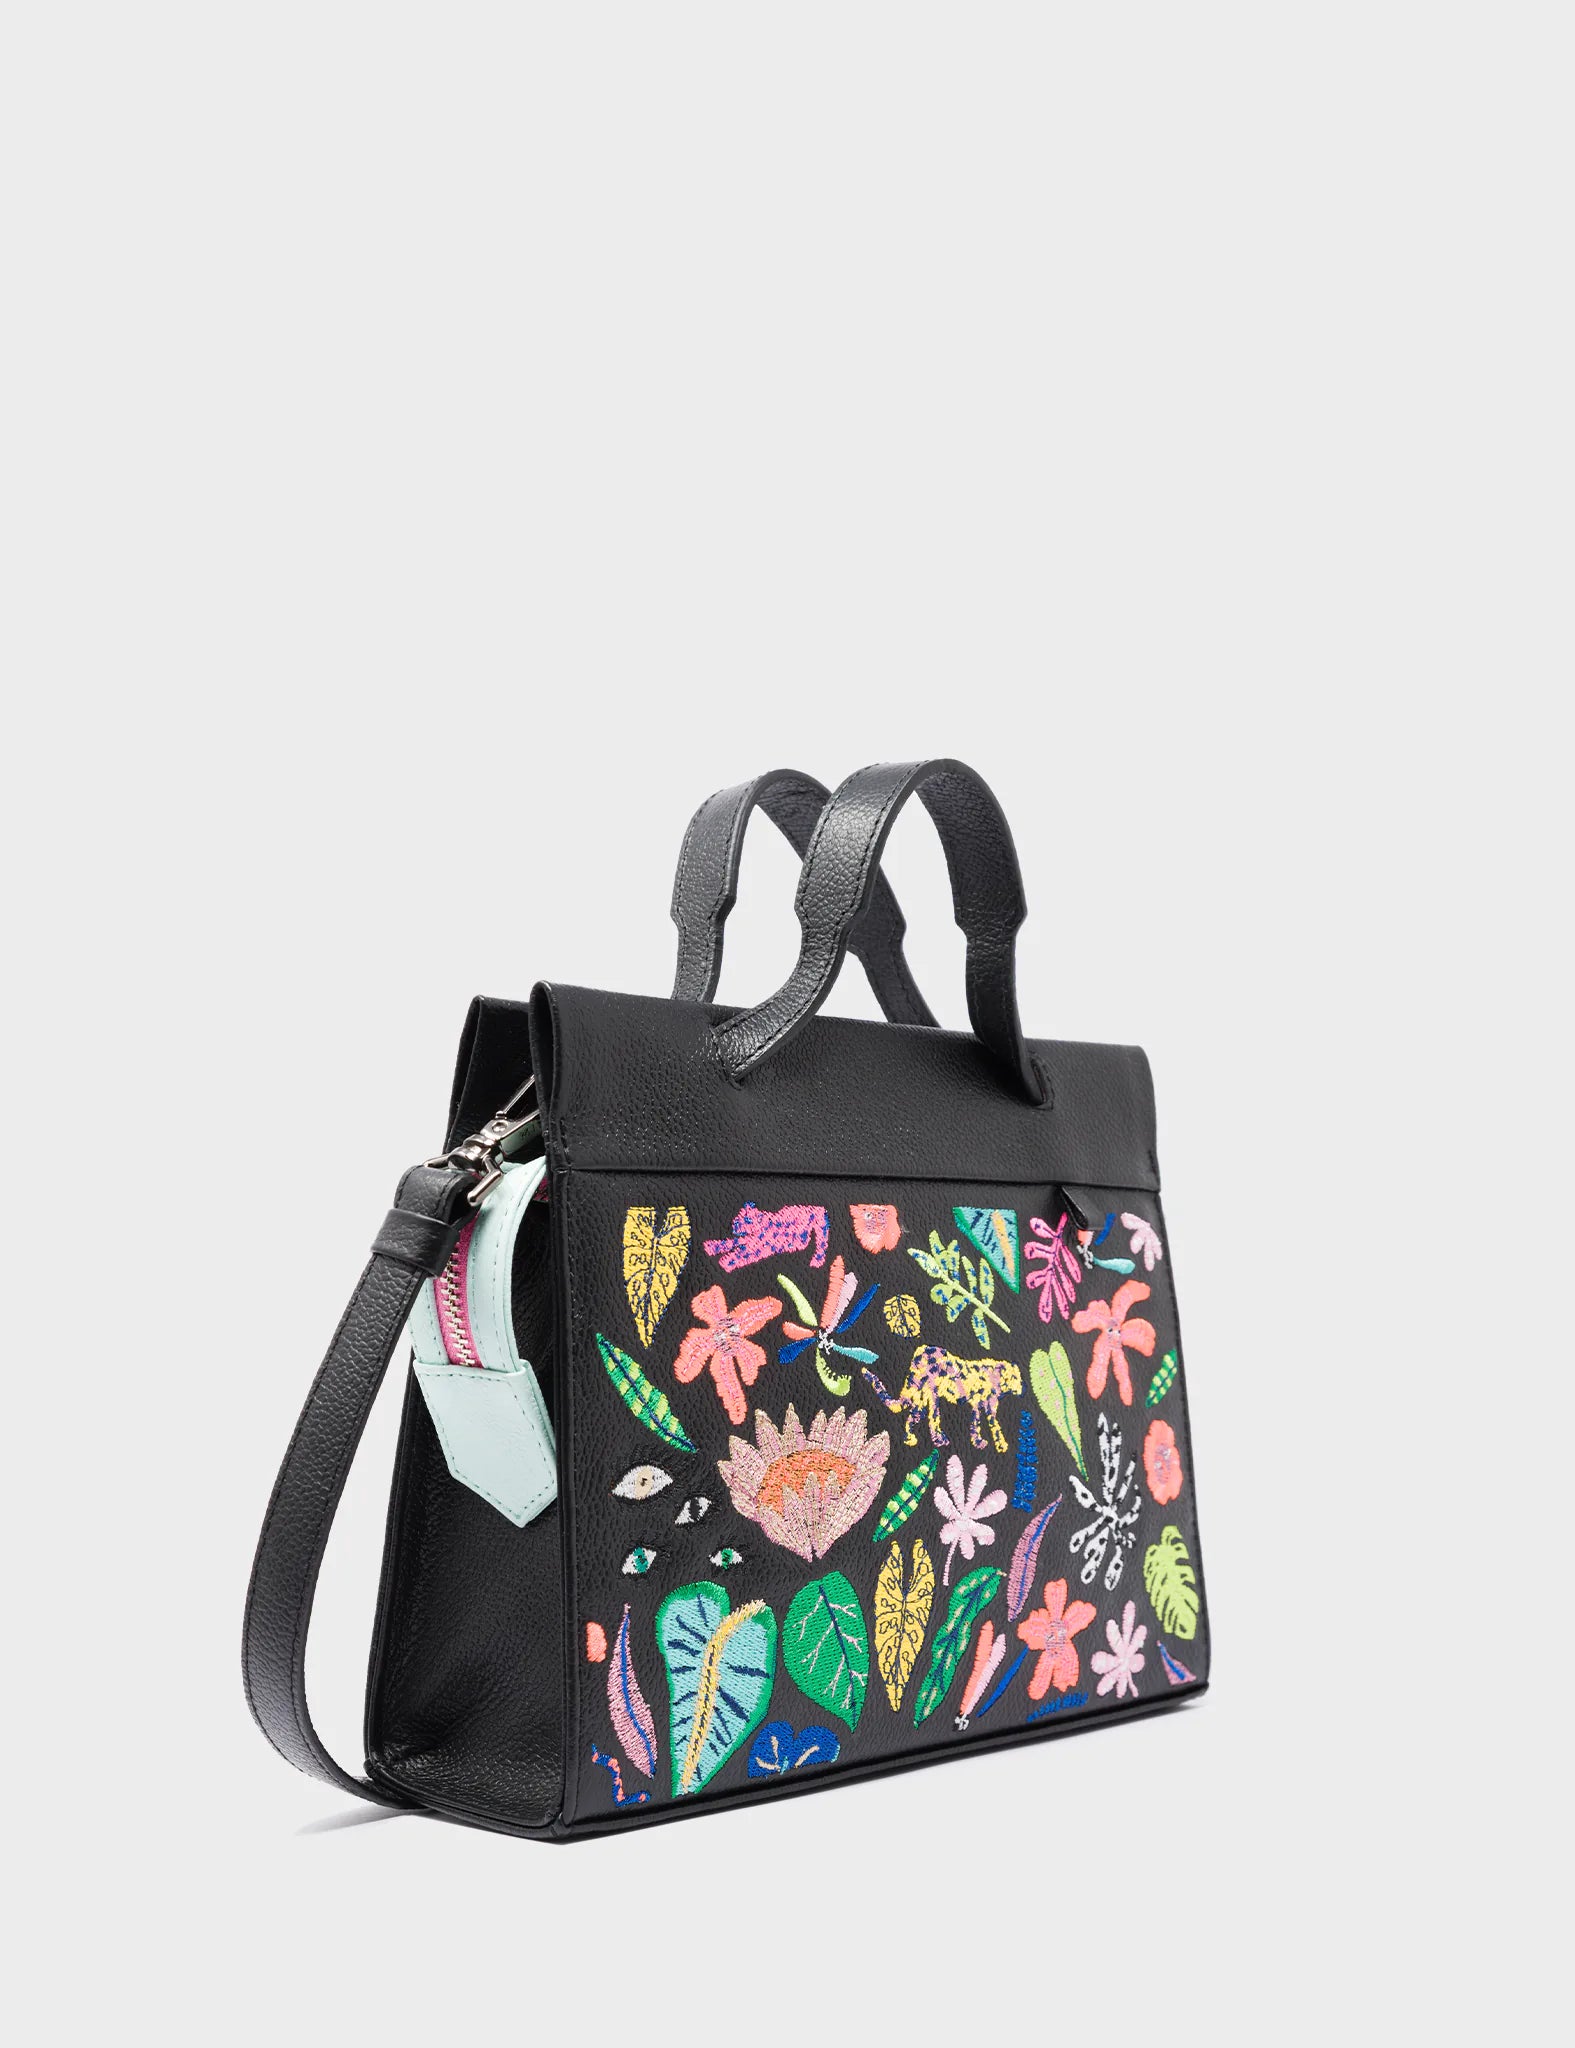 Vali Crossbody Small Black Leather Bag - El Tropico Print and Embroidery Design - Handles Up